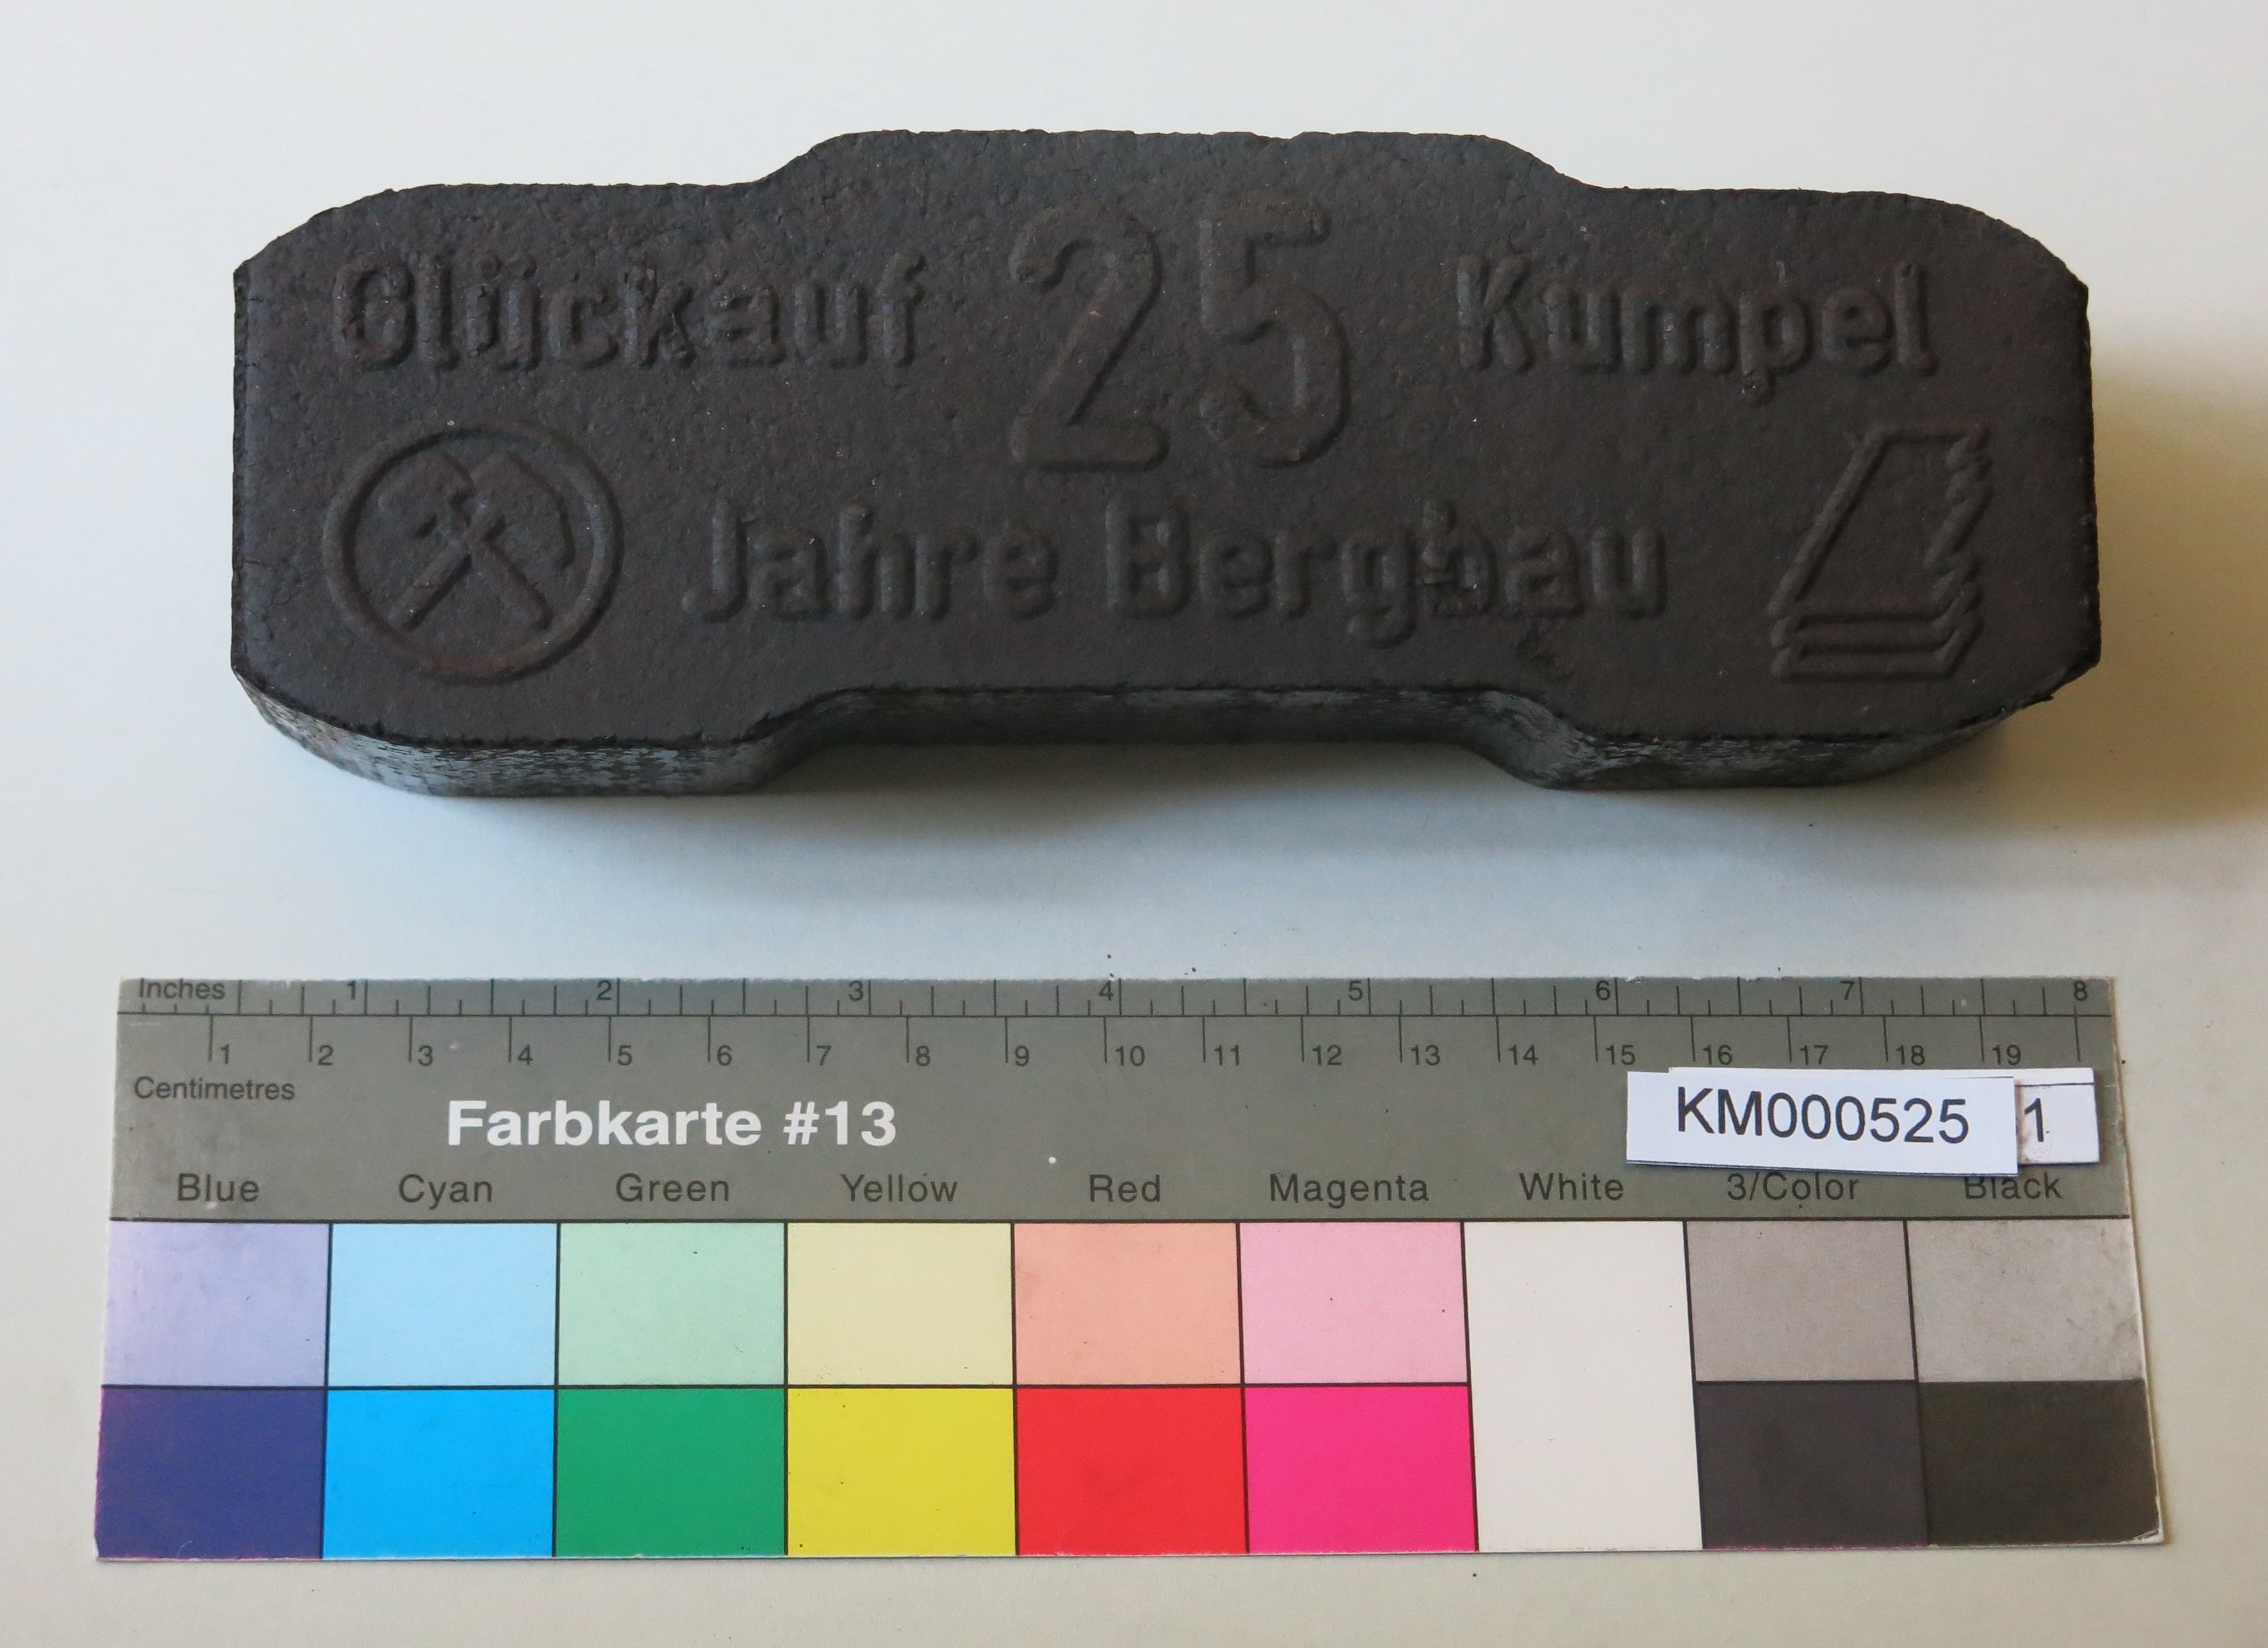 Zierbrikett "Glückauf Kumpel 25 Jahre Bergbau" (Energiefabrik Knappenrode CC BY-SA)